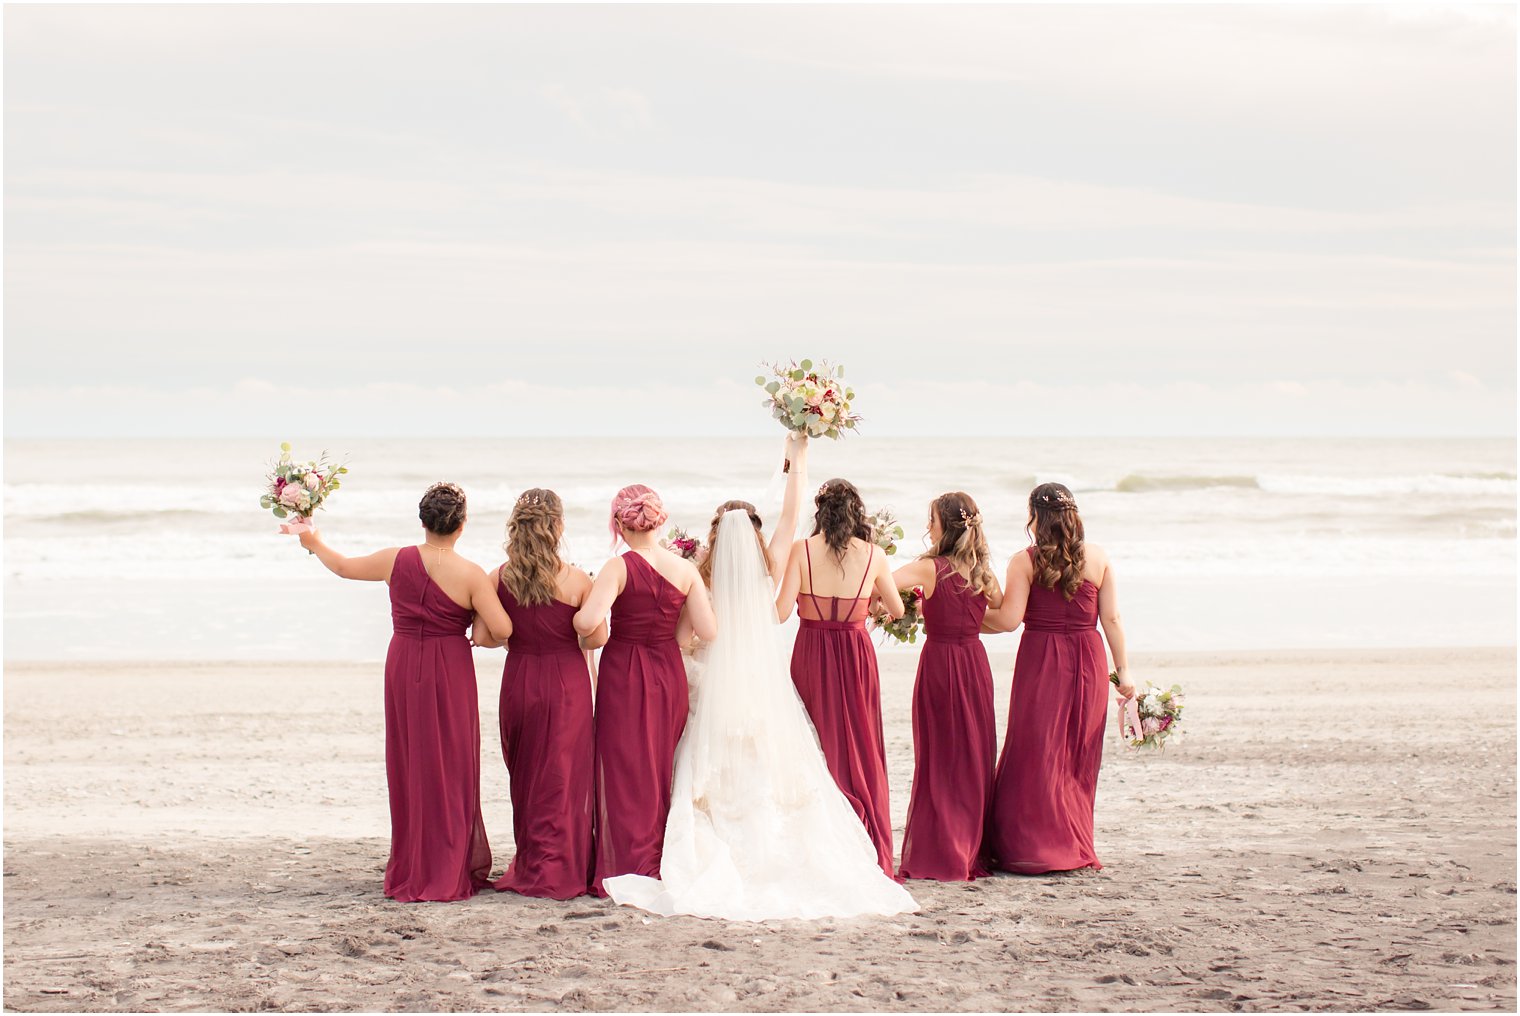 Bridesmaids in burgundy dresses on the beach in Atlantic City, NJ